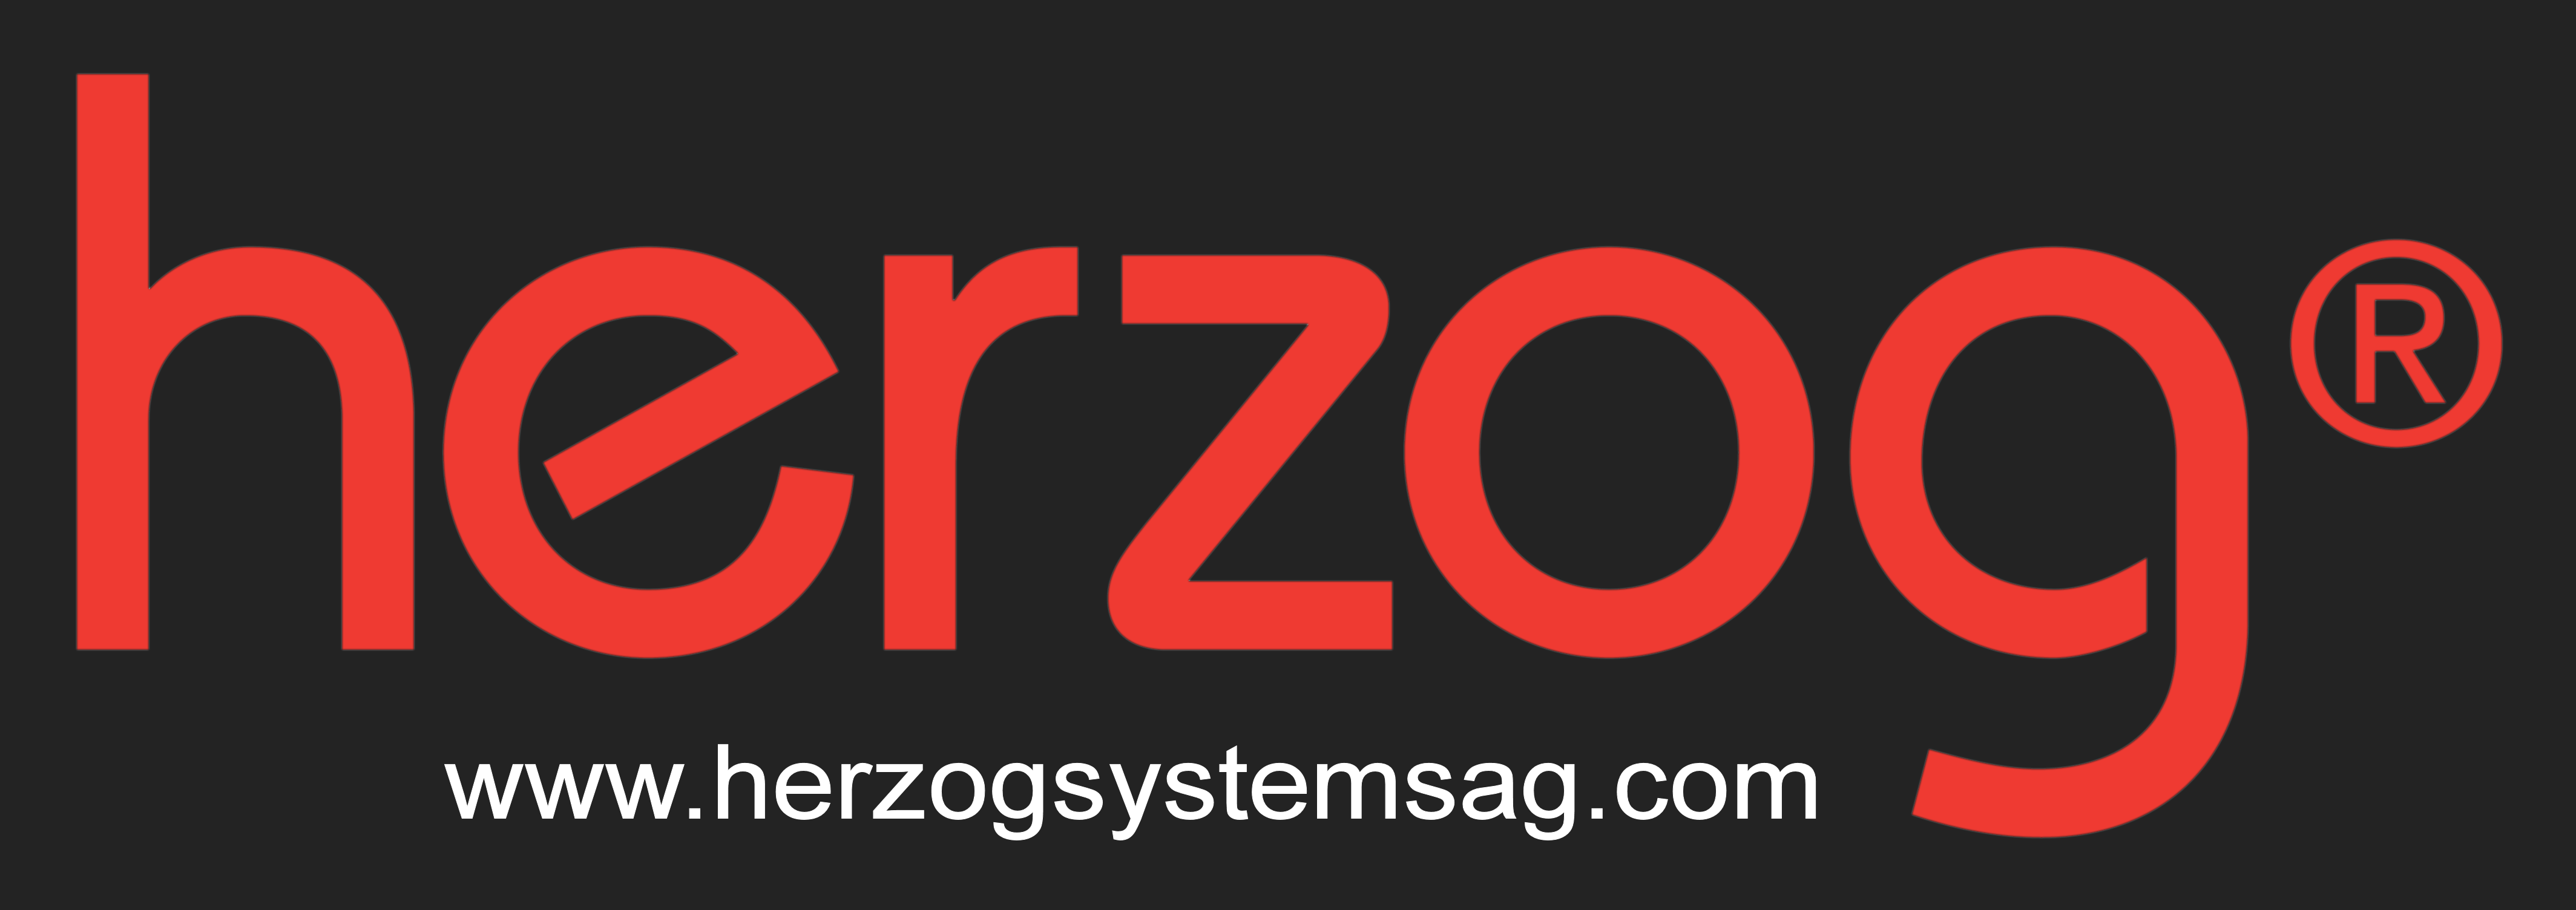 herzog systems ag_logo